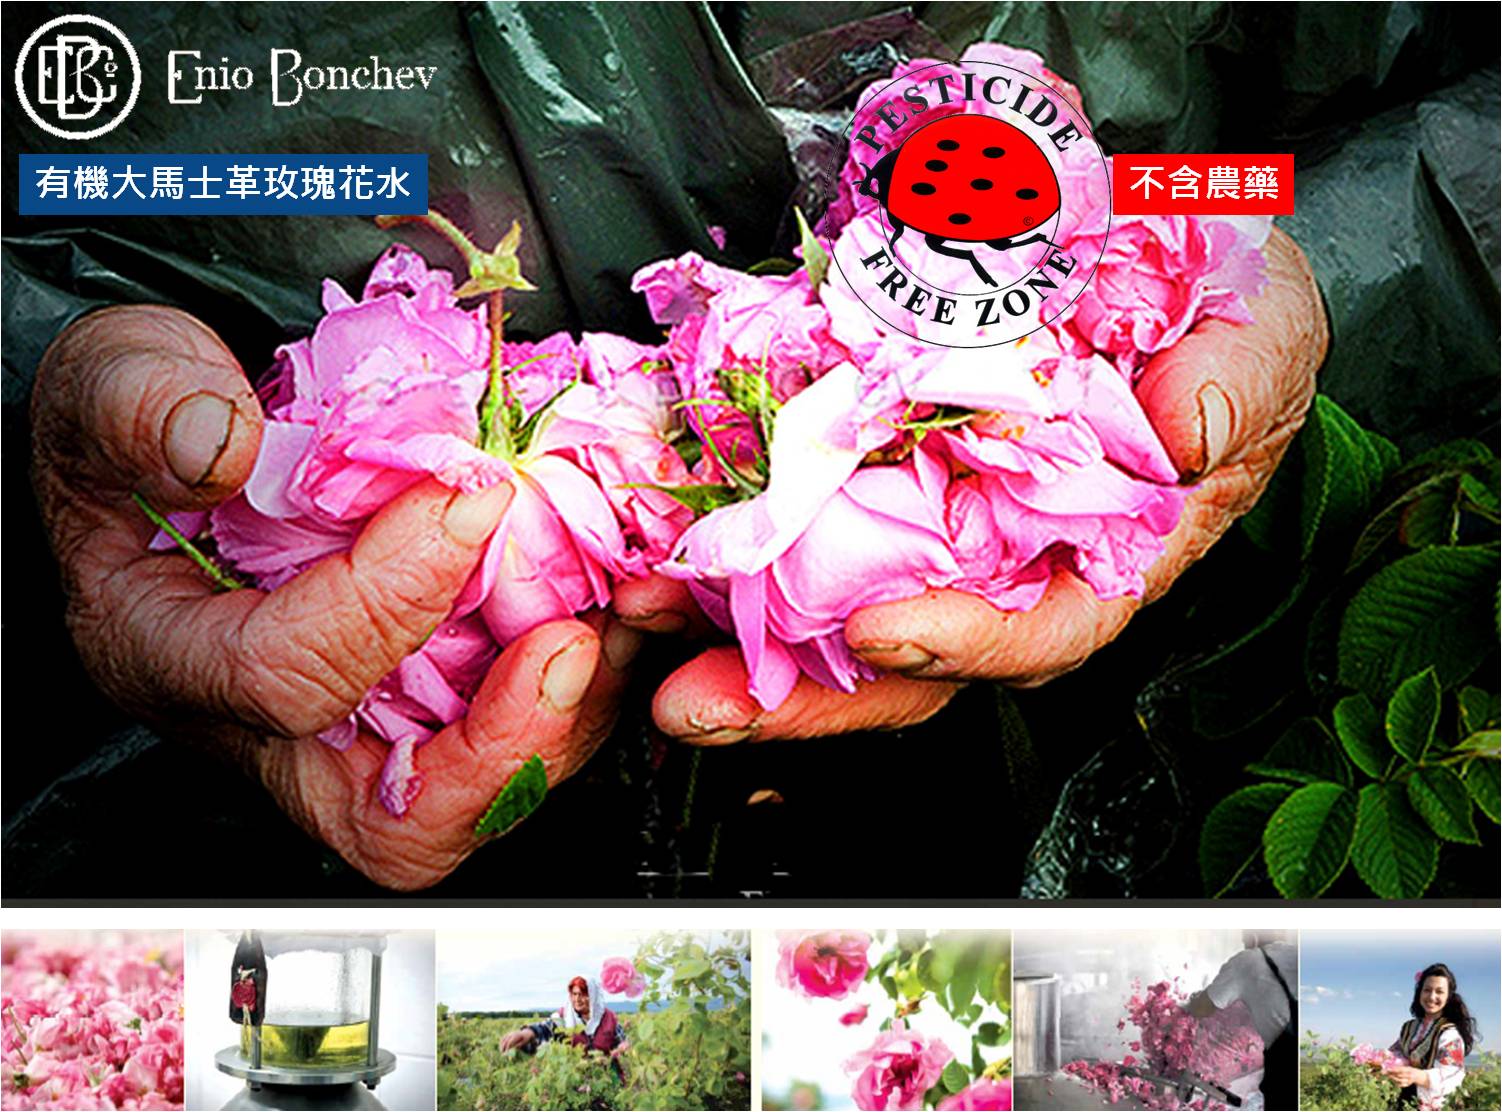 Enio Bonchev生產的有機大馬士革玫瑰花水(Organic Rose Damascena water)不含農藥